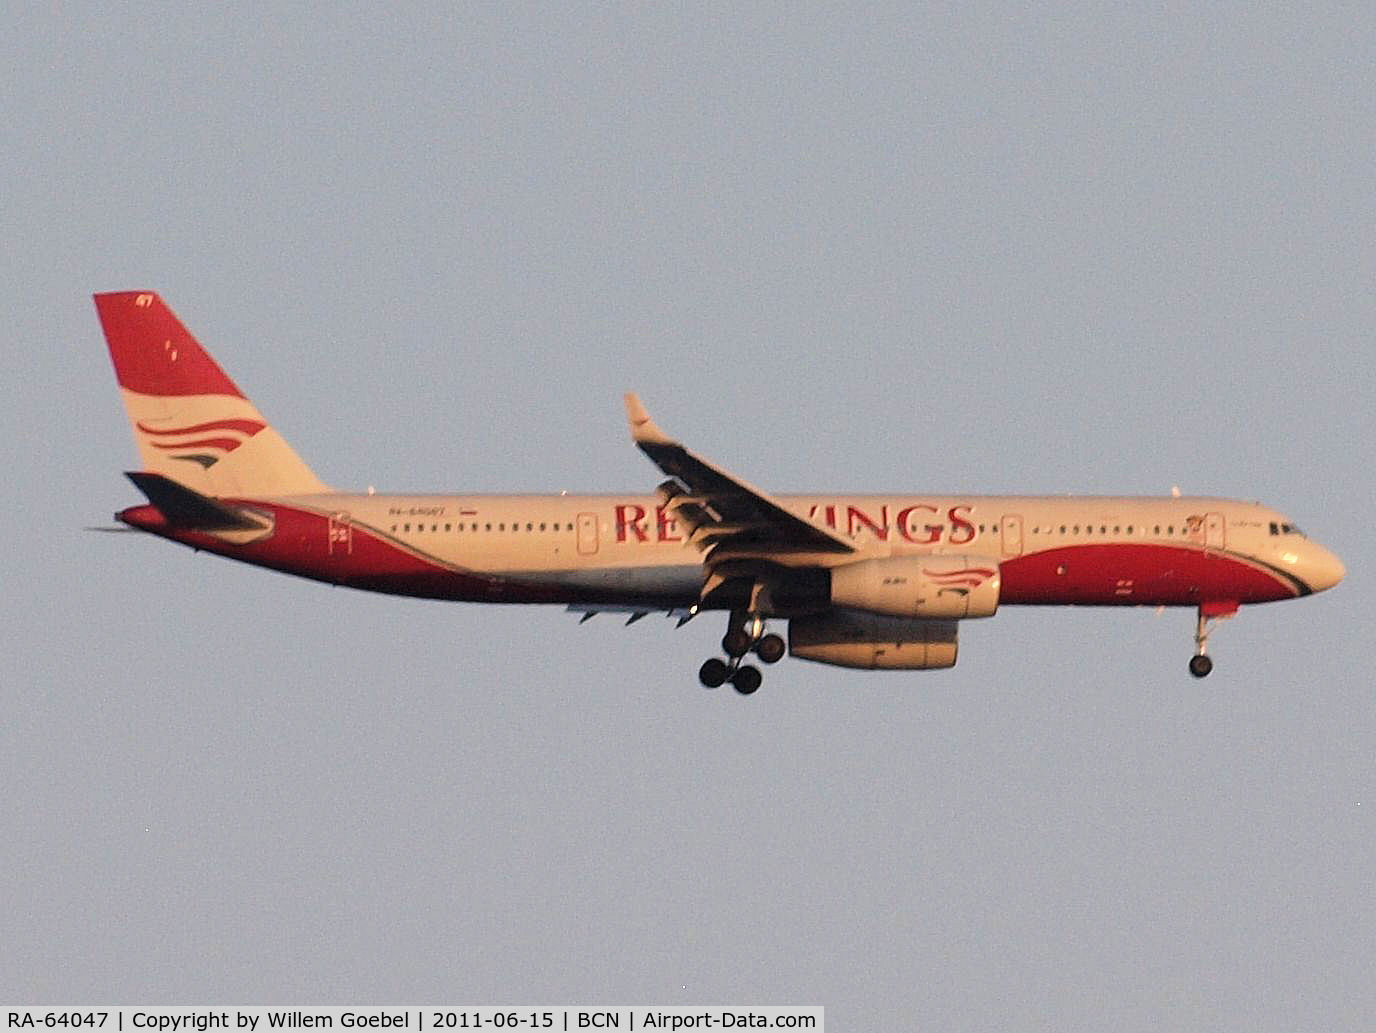 RA-64047, 2008 Tupolev Tu-204-100B C/N 1450743164047, Prepare for landing on Barcelona Airport